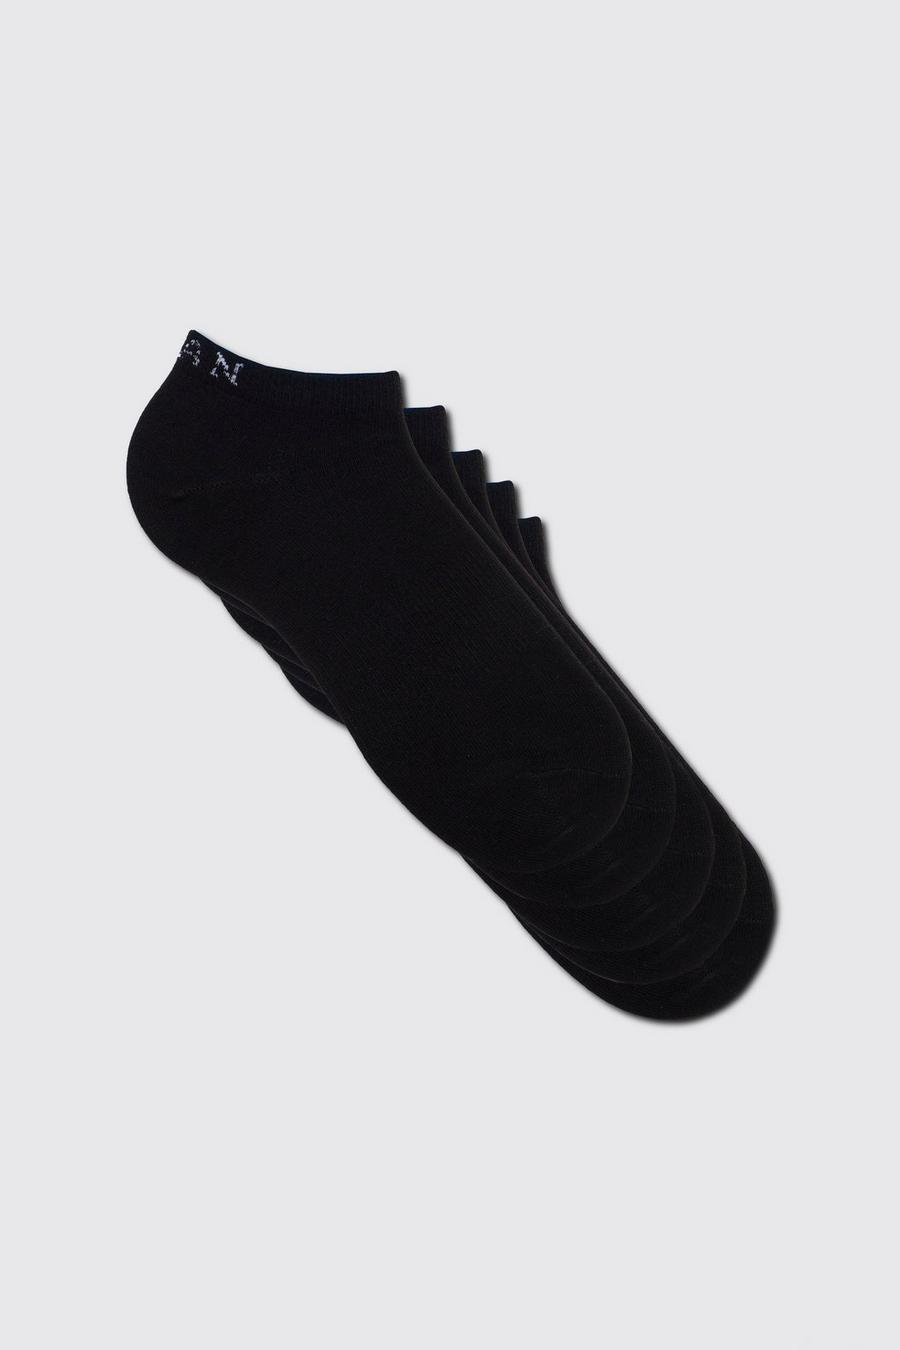 Pack de 5 pares de calcetines MAN deportivos, Black